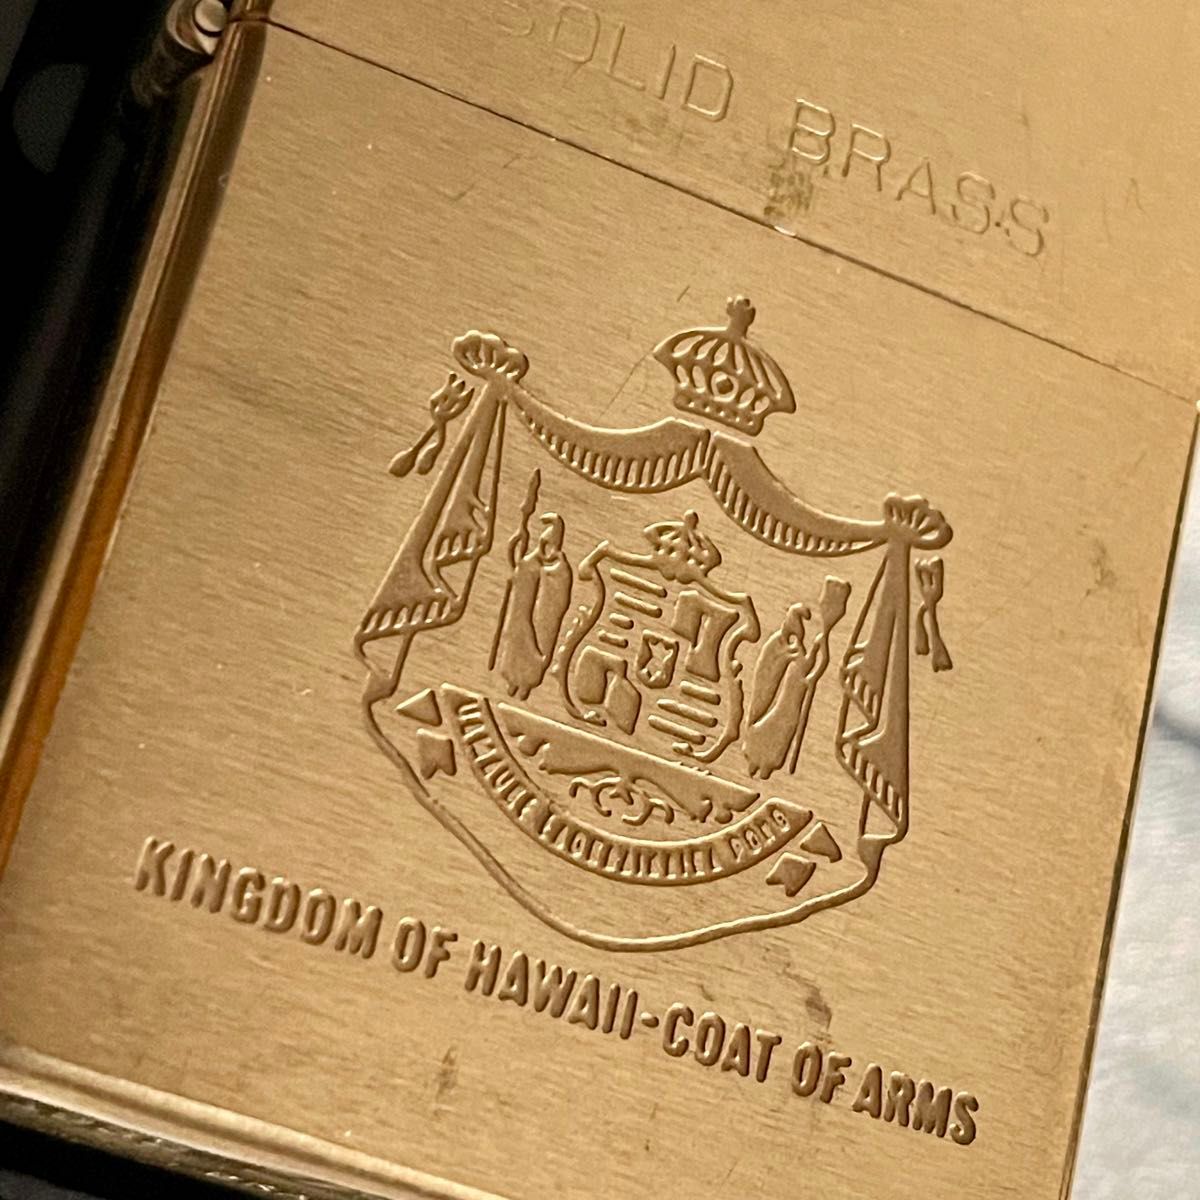 ZIPPOライターSOLID BRASS KINGDOM OF HAWAII-COAT OF ARMS ダブルイヤー オイル付